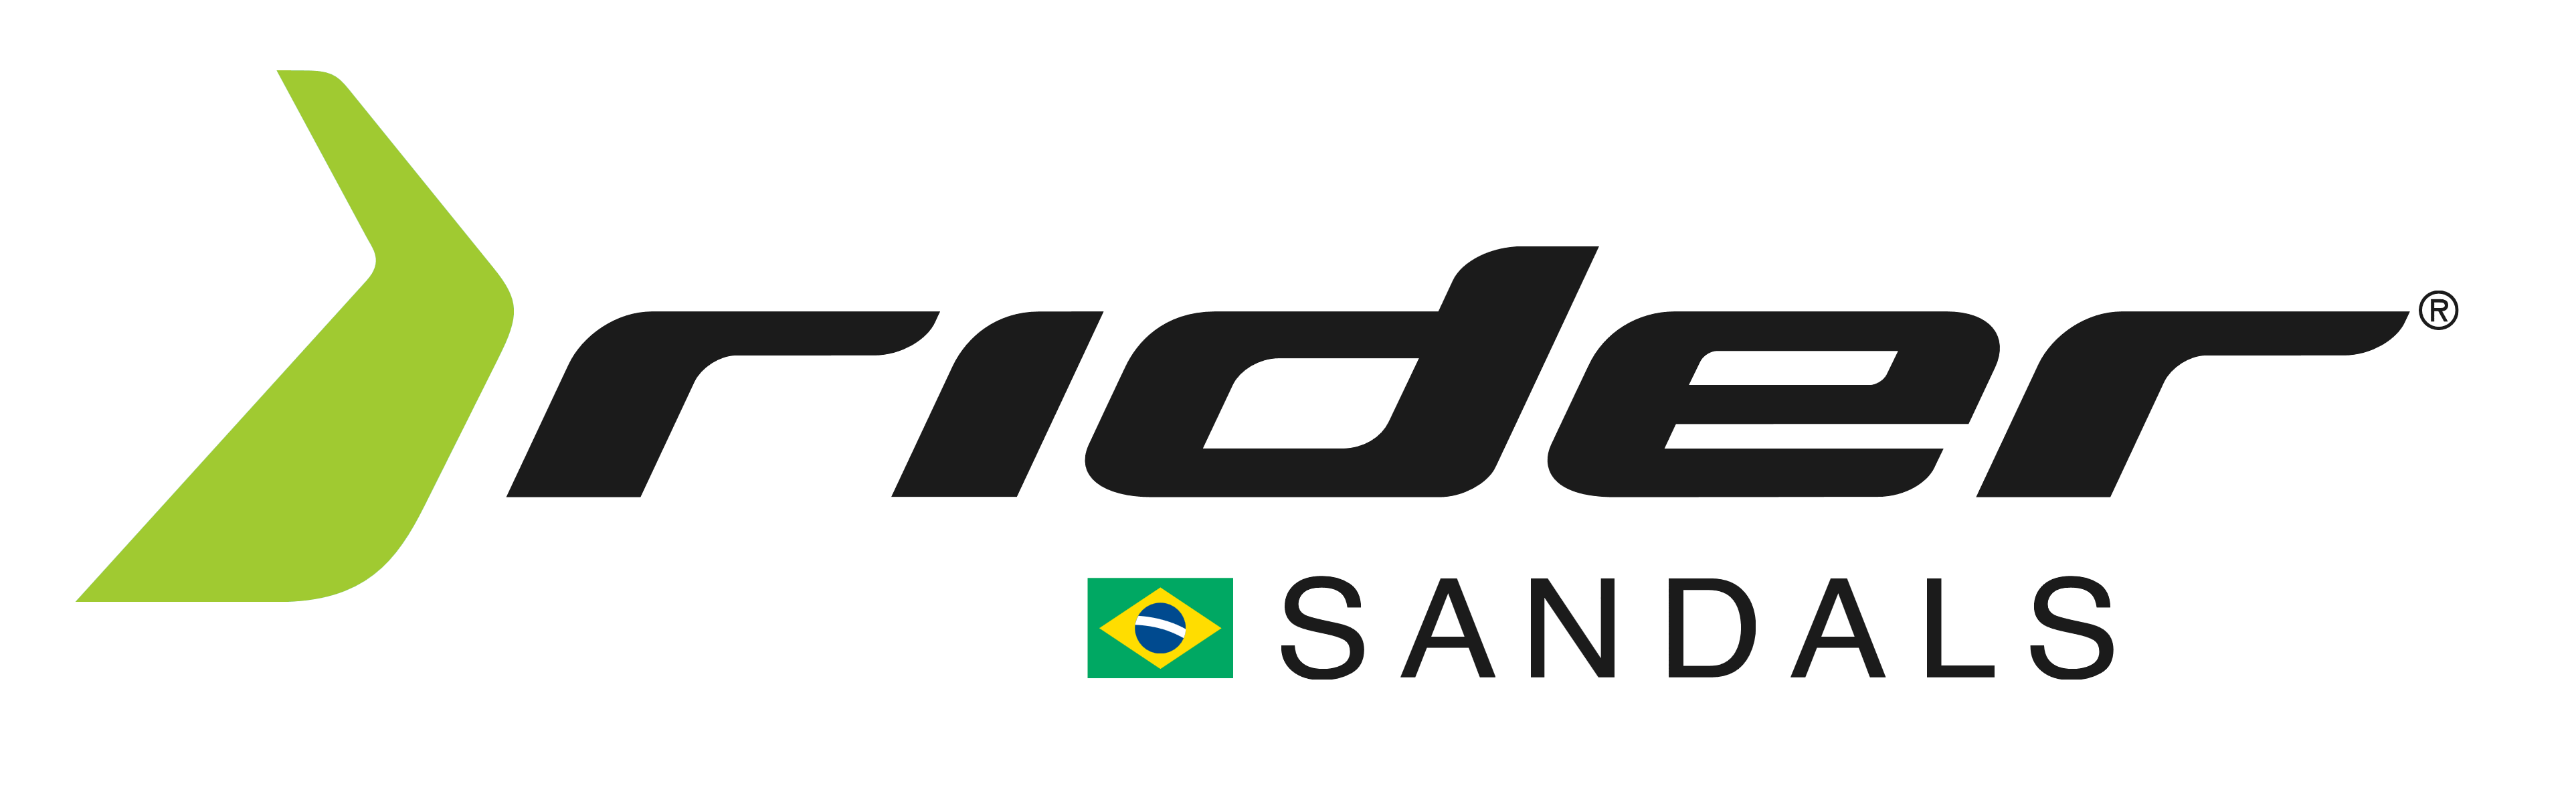 Rider Sandals logo, logotype